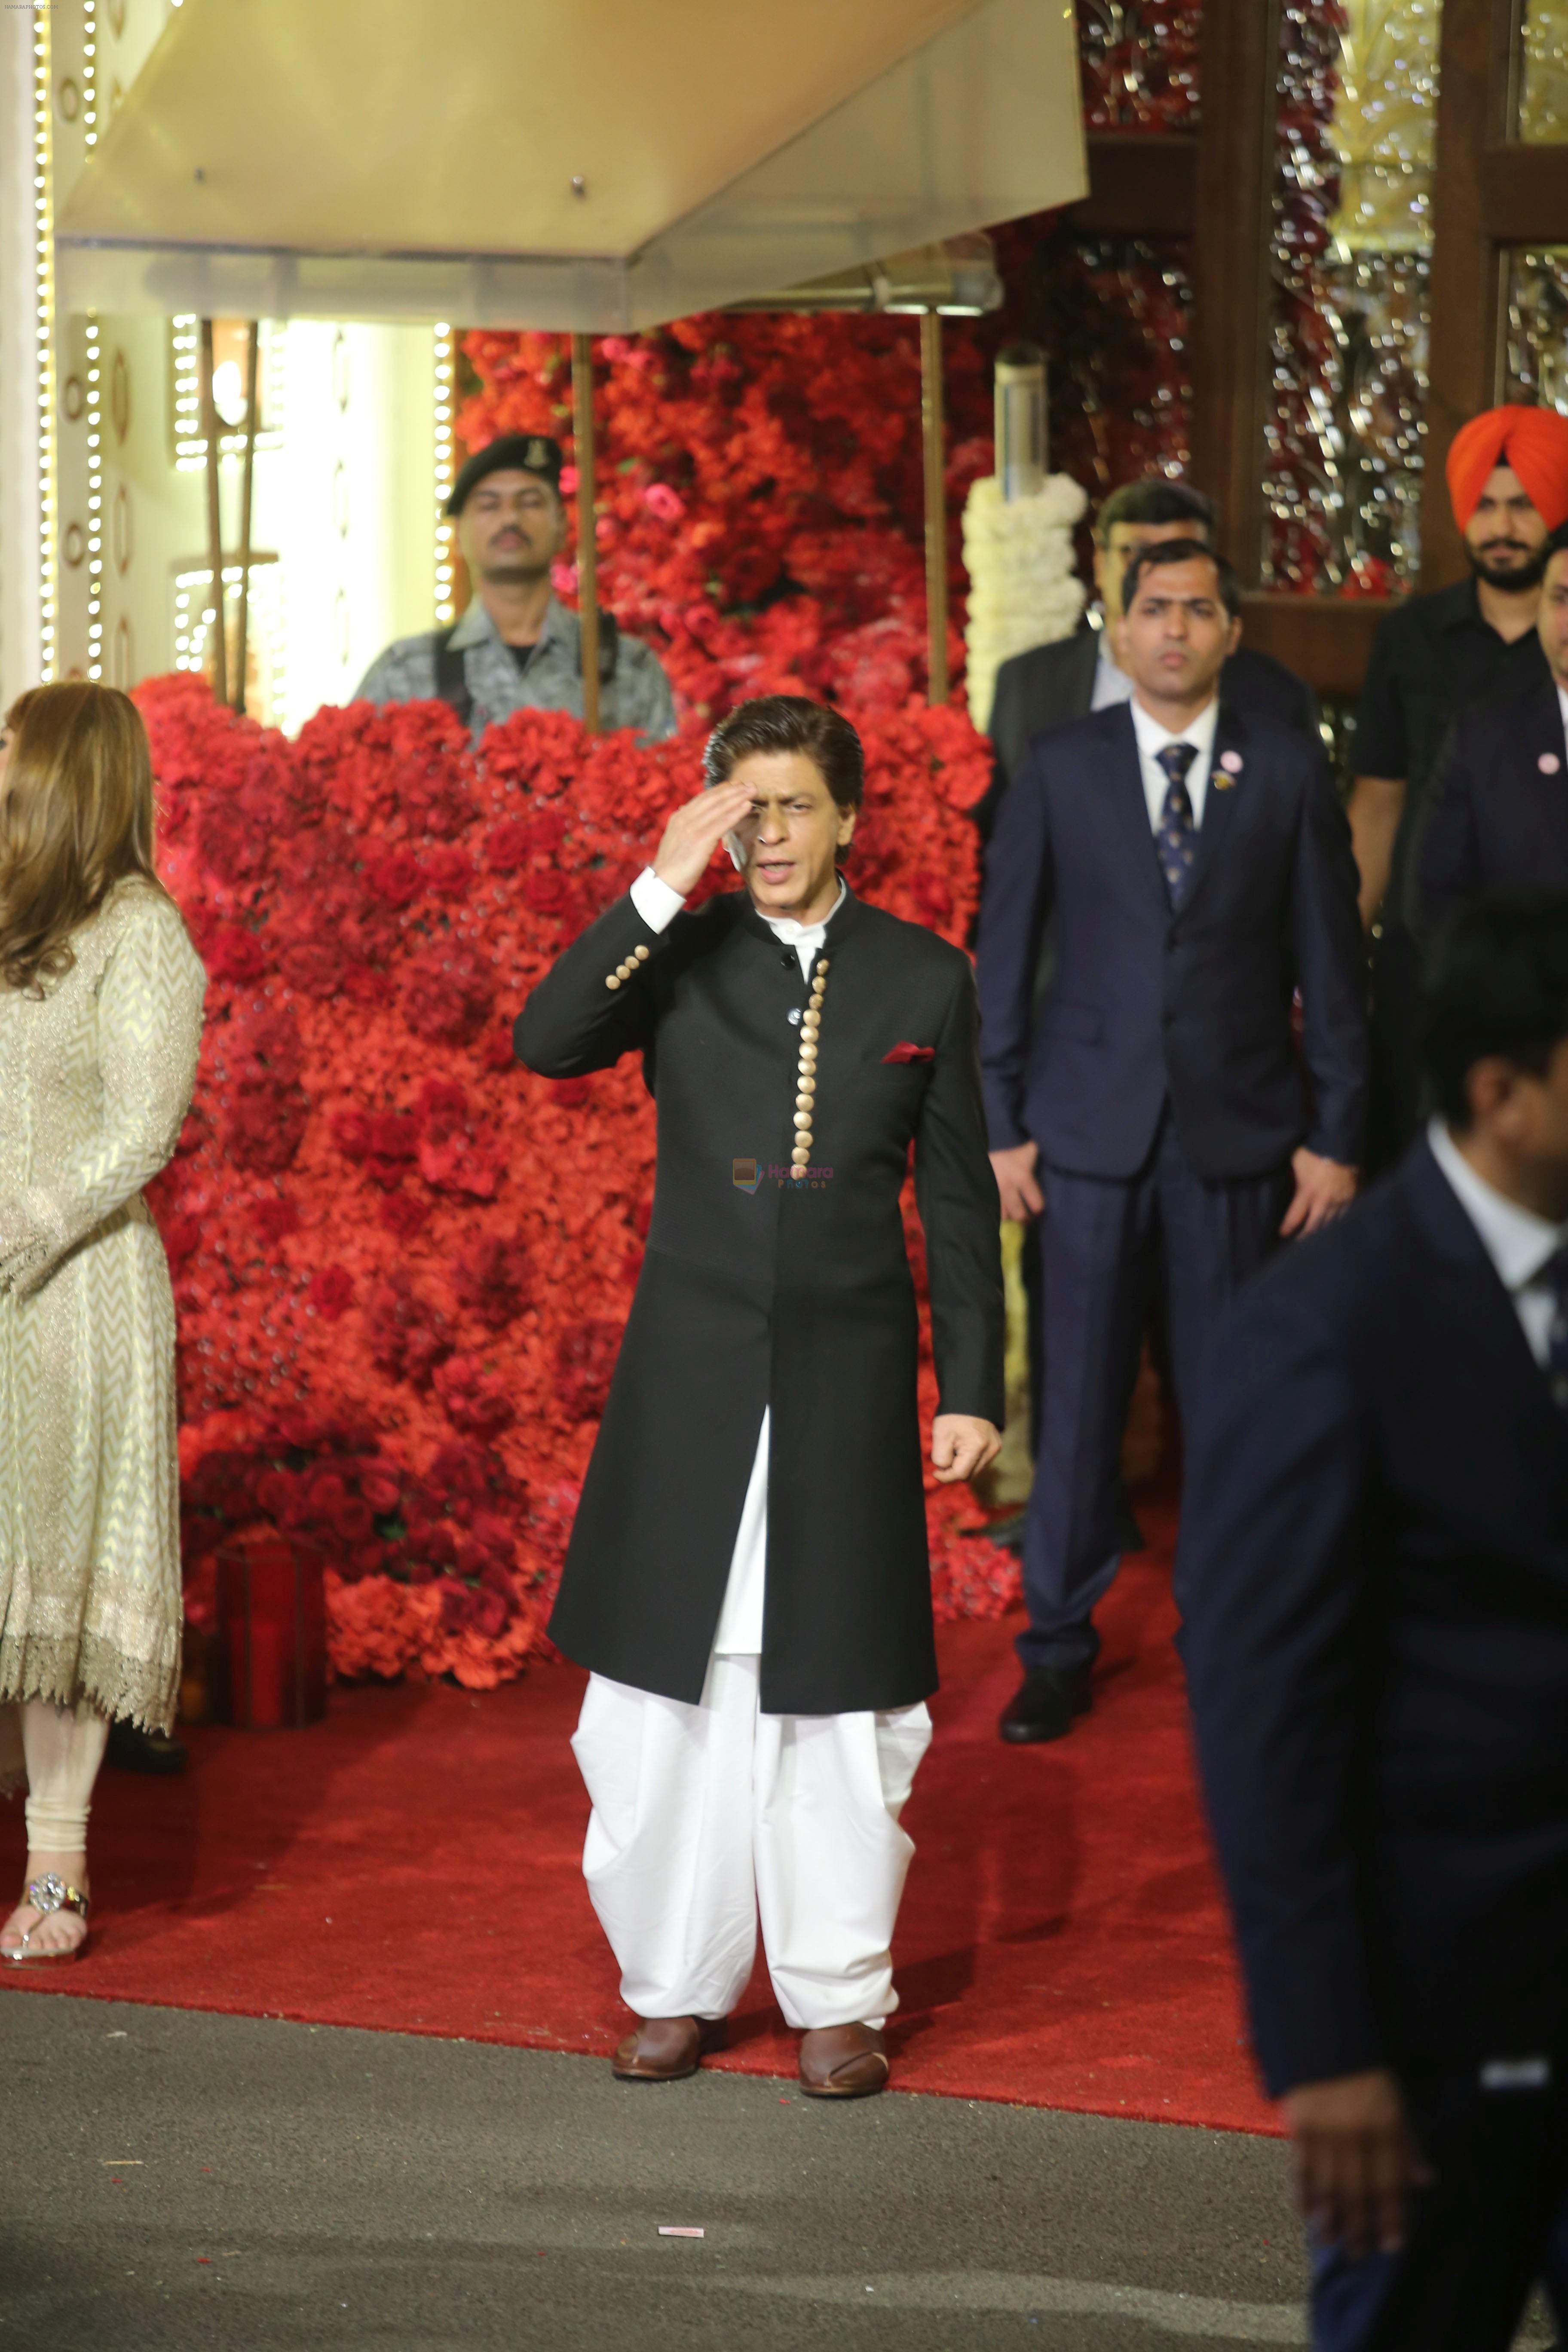 Shah Rukh Khan at Isha Ambani and Anand Piramal's wedding on 12th Dec 2018